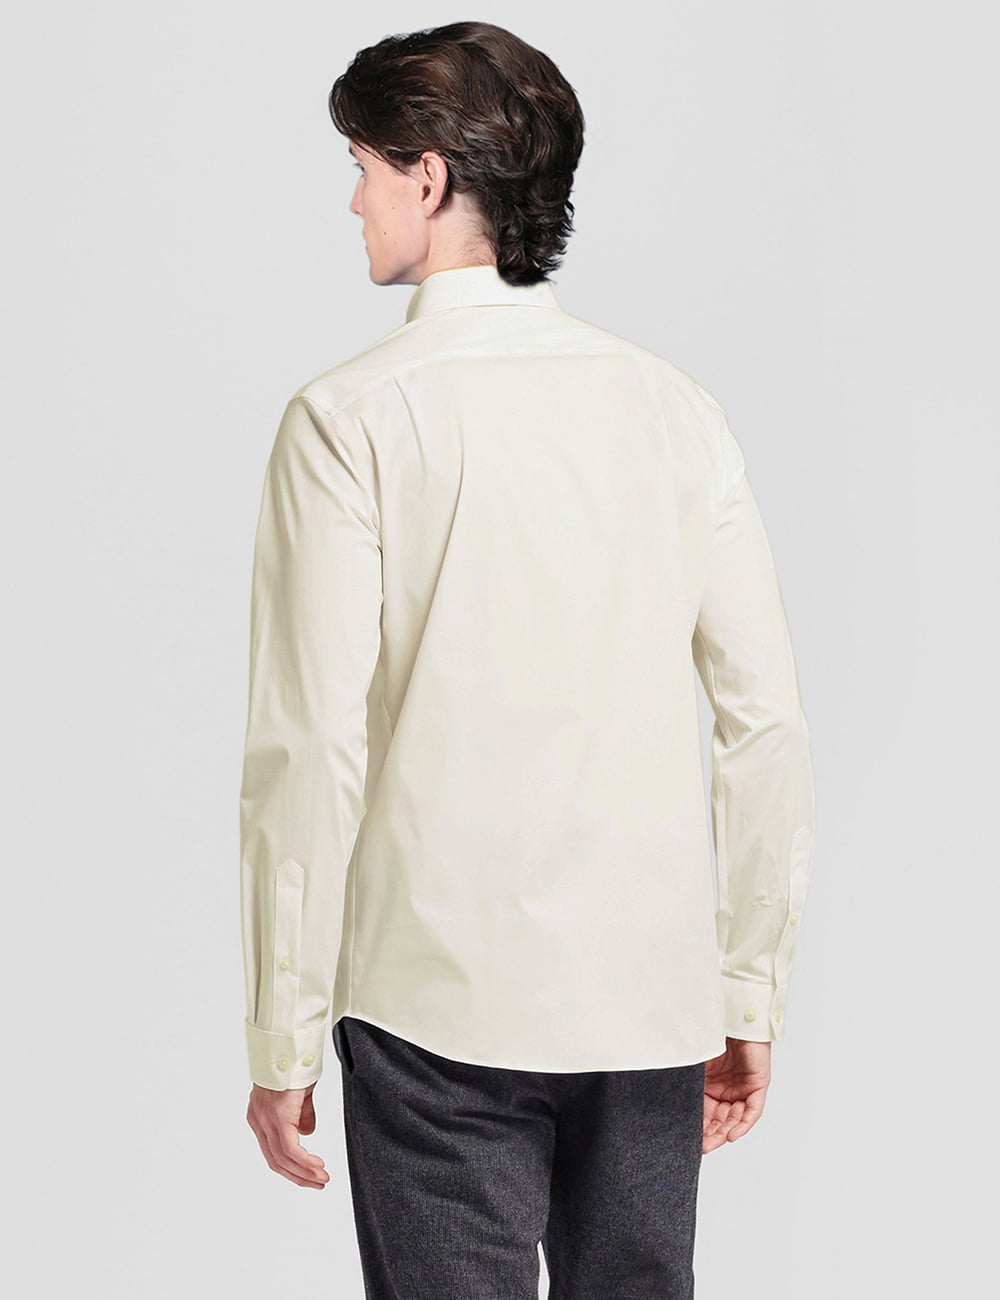 Bestfit Menswear  Men's Classic/Regular Fit Long Sleeve Spread Collar  Dress Shirt